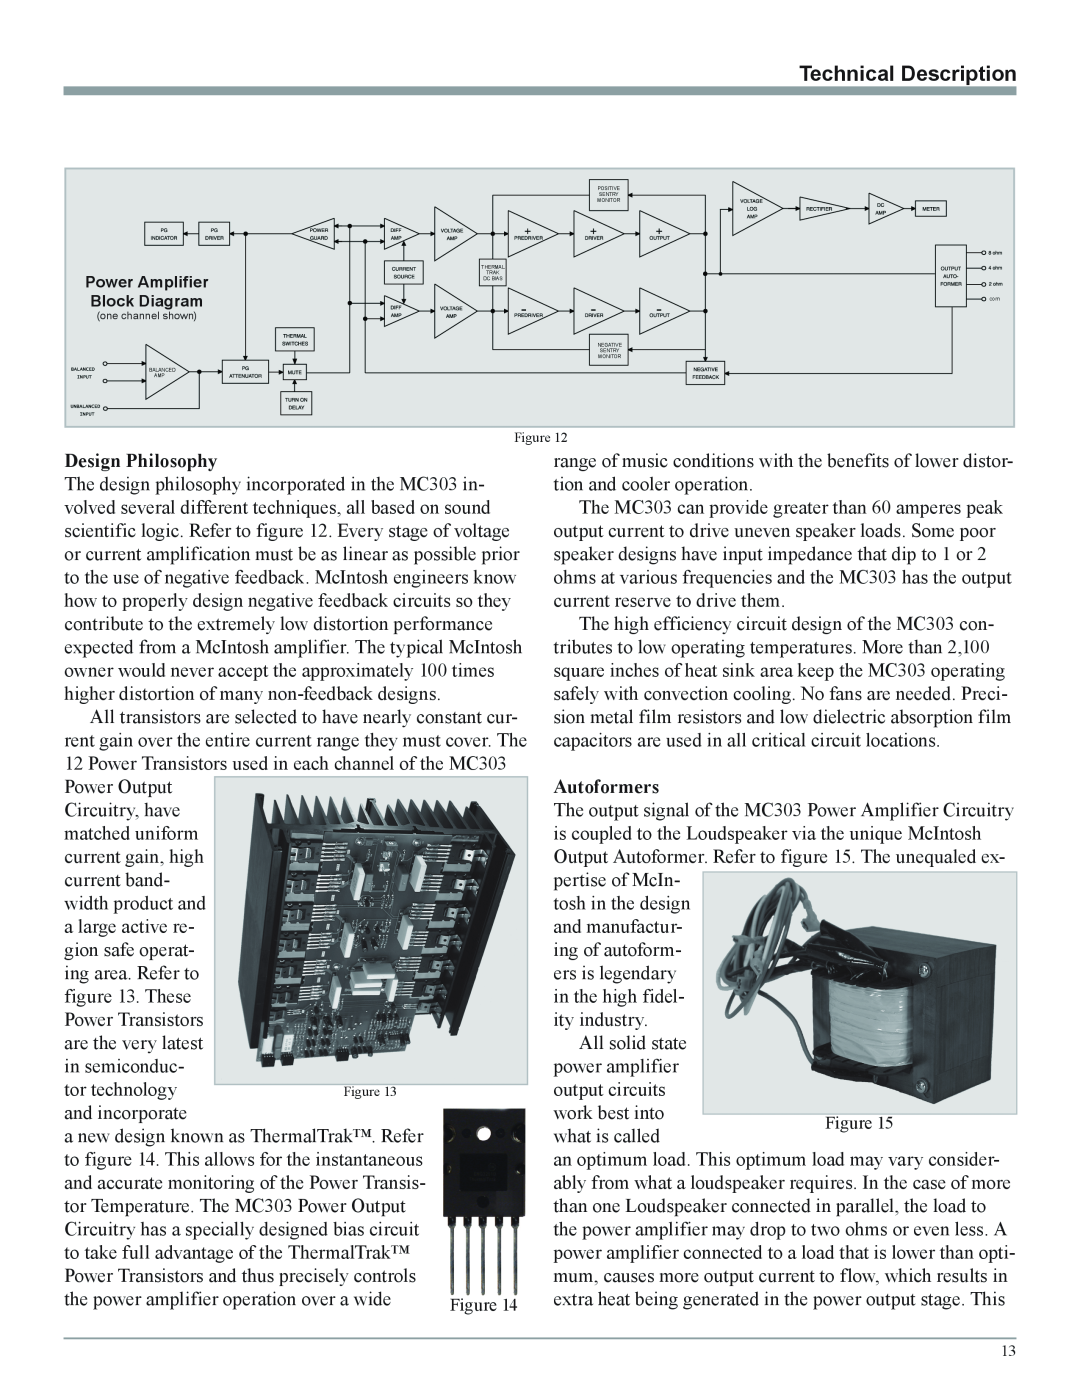 McIntosh MC303 owner manual Technical Description, Design Philosophy, Autoformers 